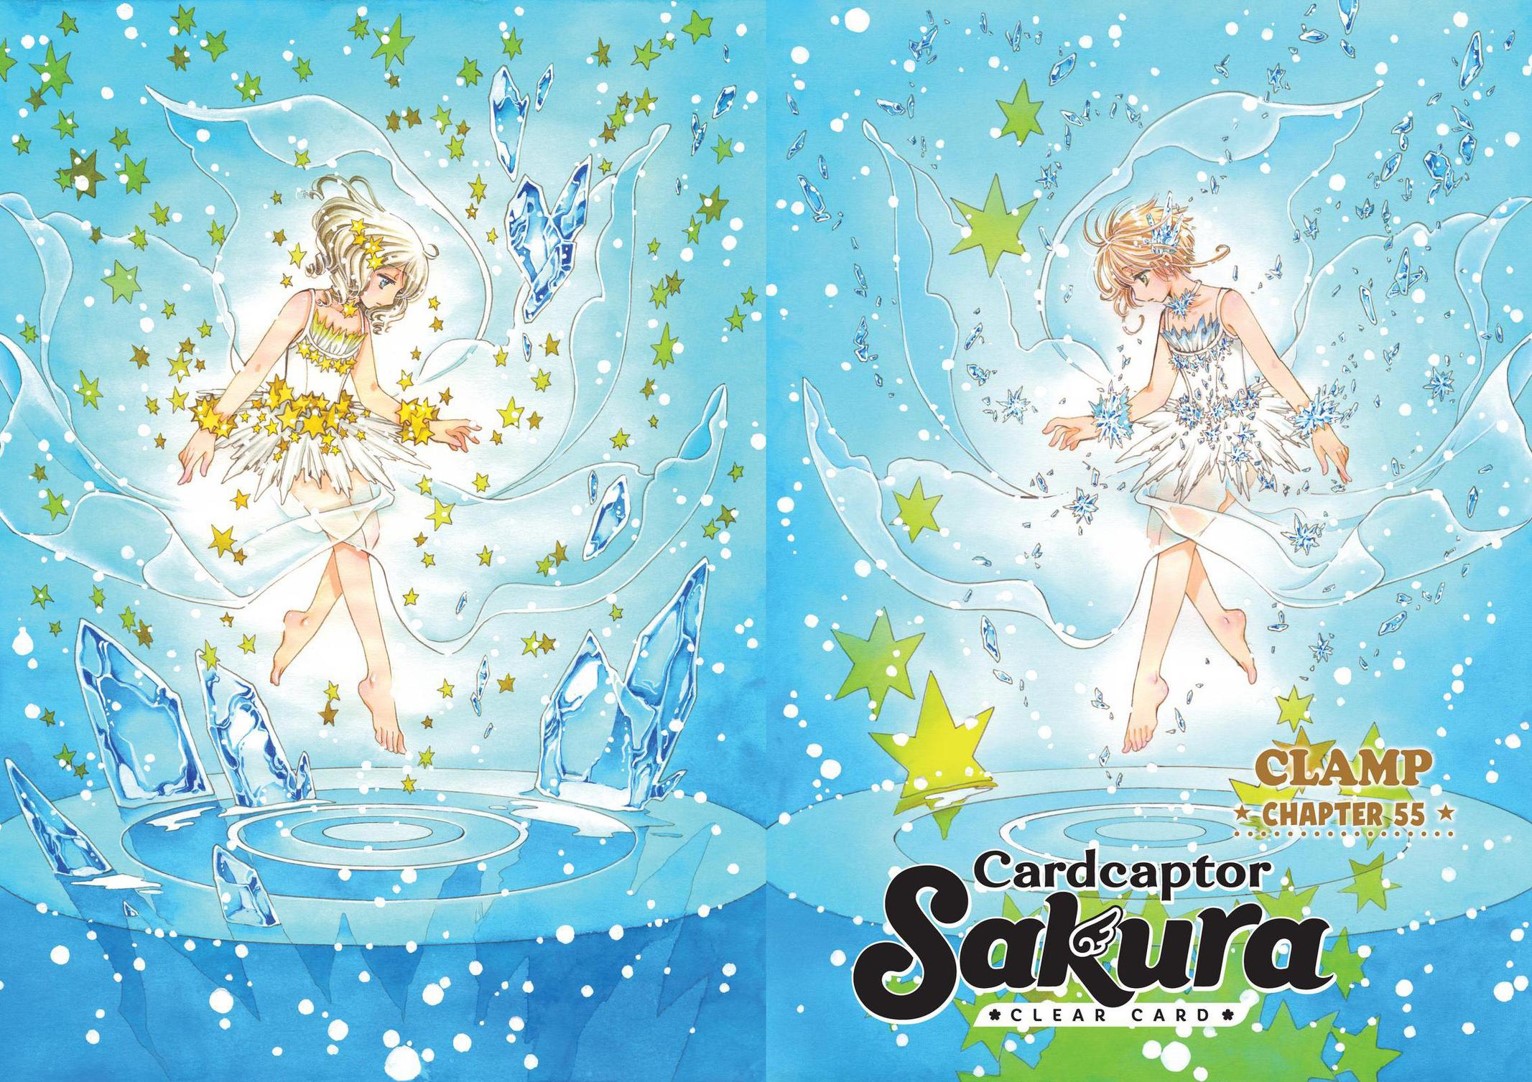 Card Captor Sakura – Clear Card arc – Chapter 76